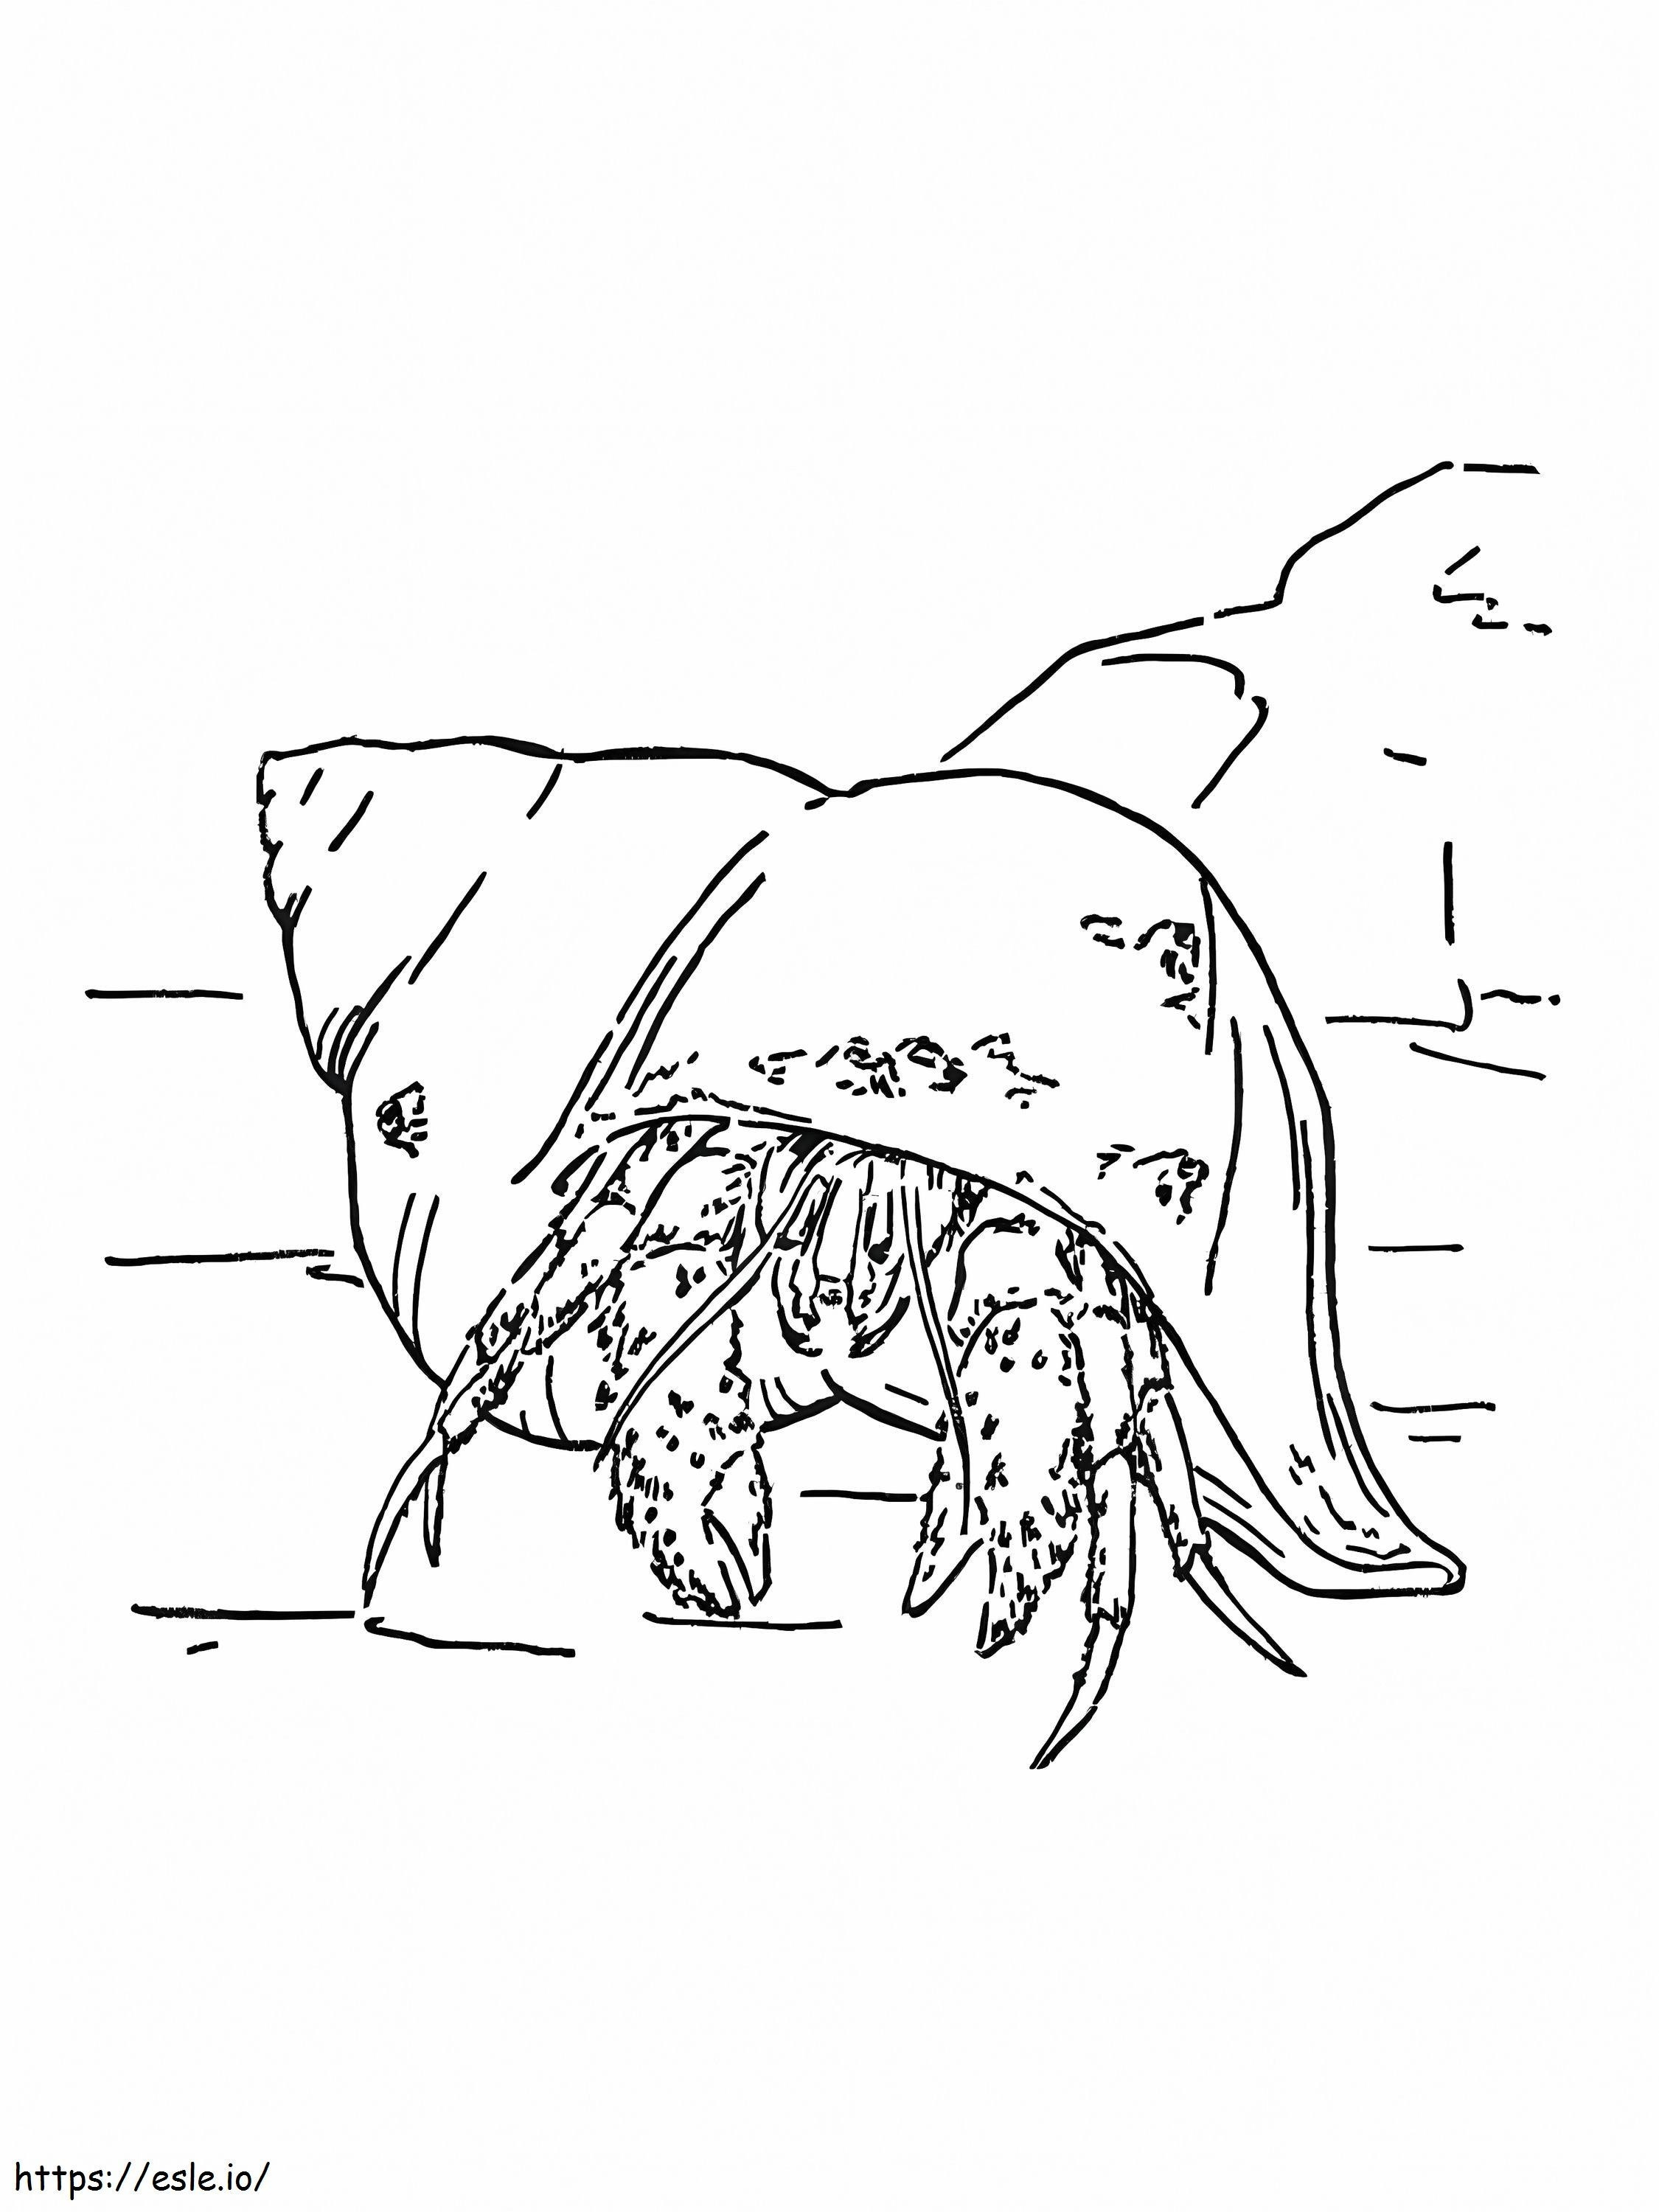 Hermit Crab 10 coloring page